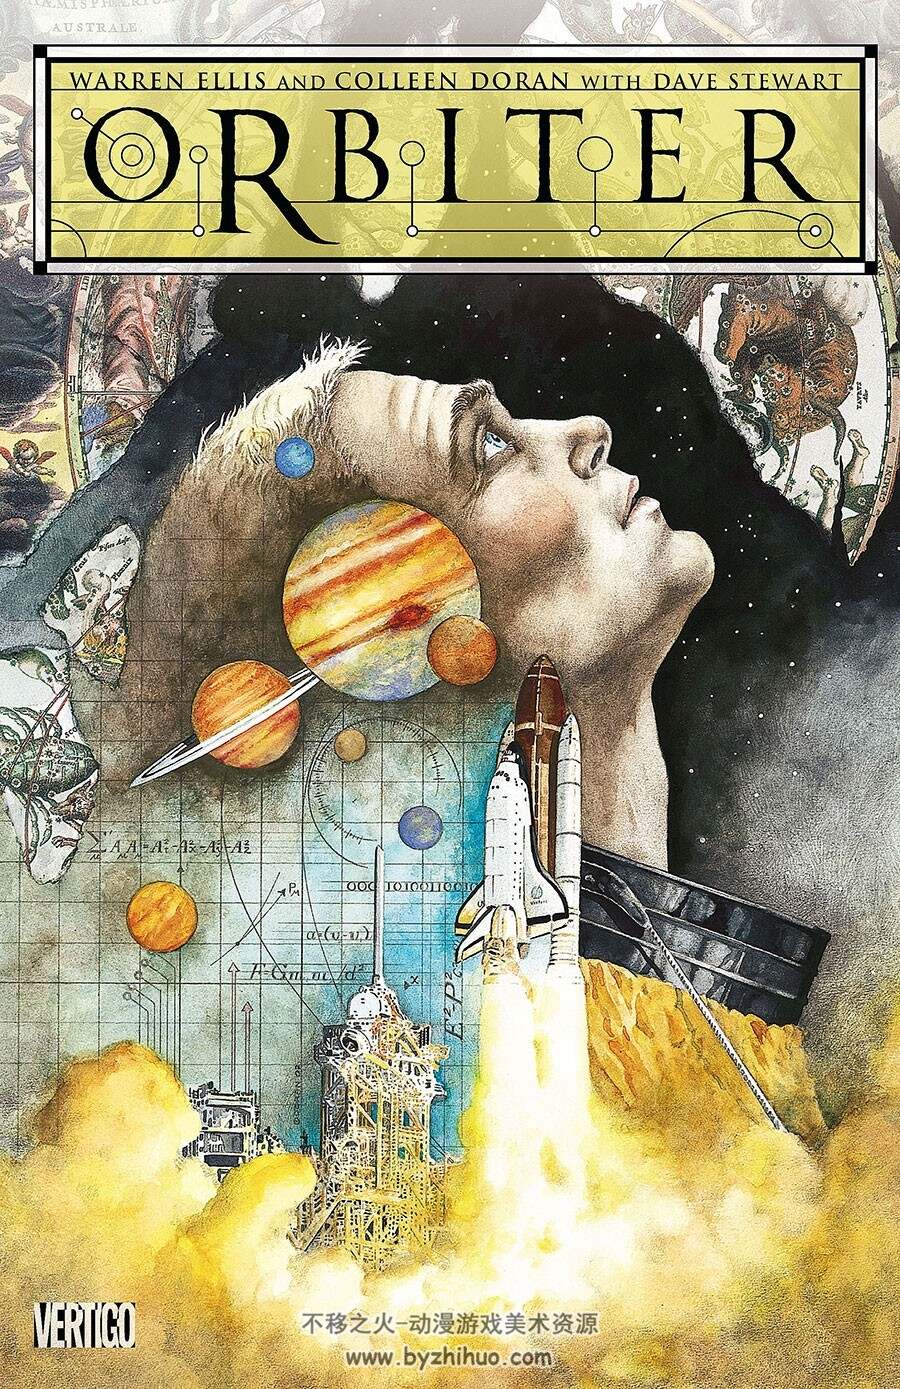 Orbiter 全一册 WARREN ELLIS 意大利语科幻彩色漫画